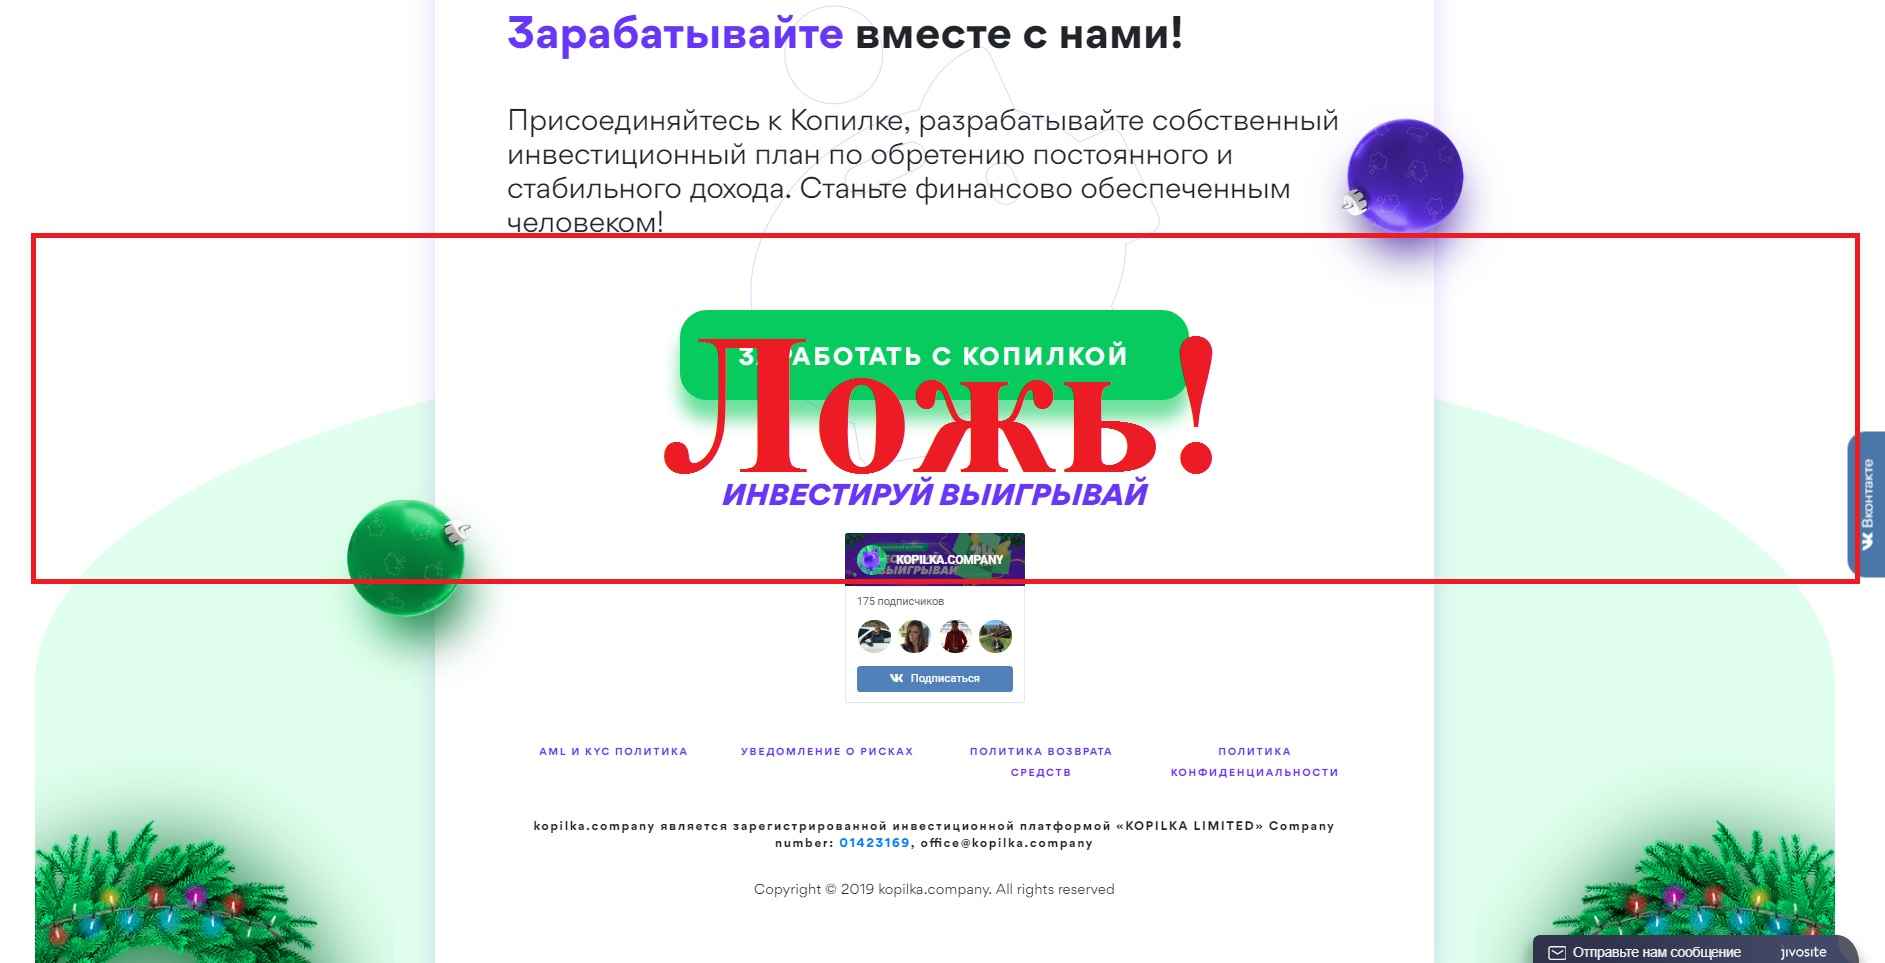 KOPILKA LIMITED – отзывы об инвестиционном проекте kopilka.company